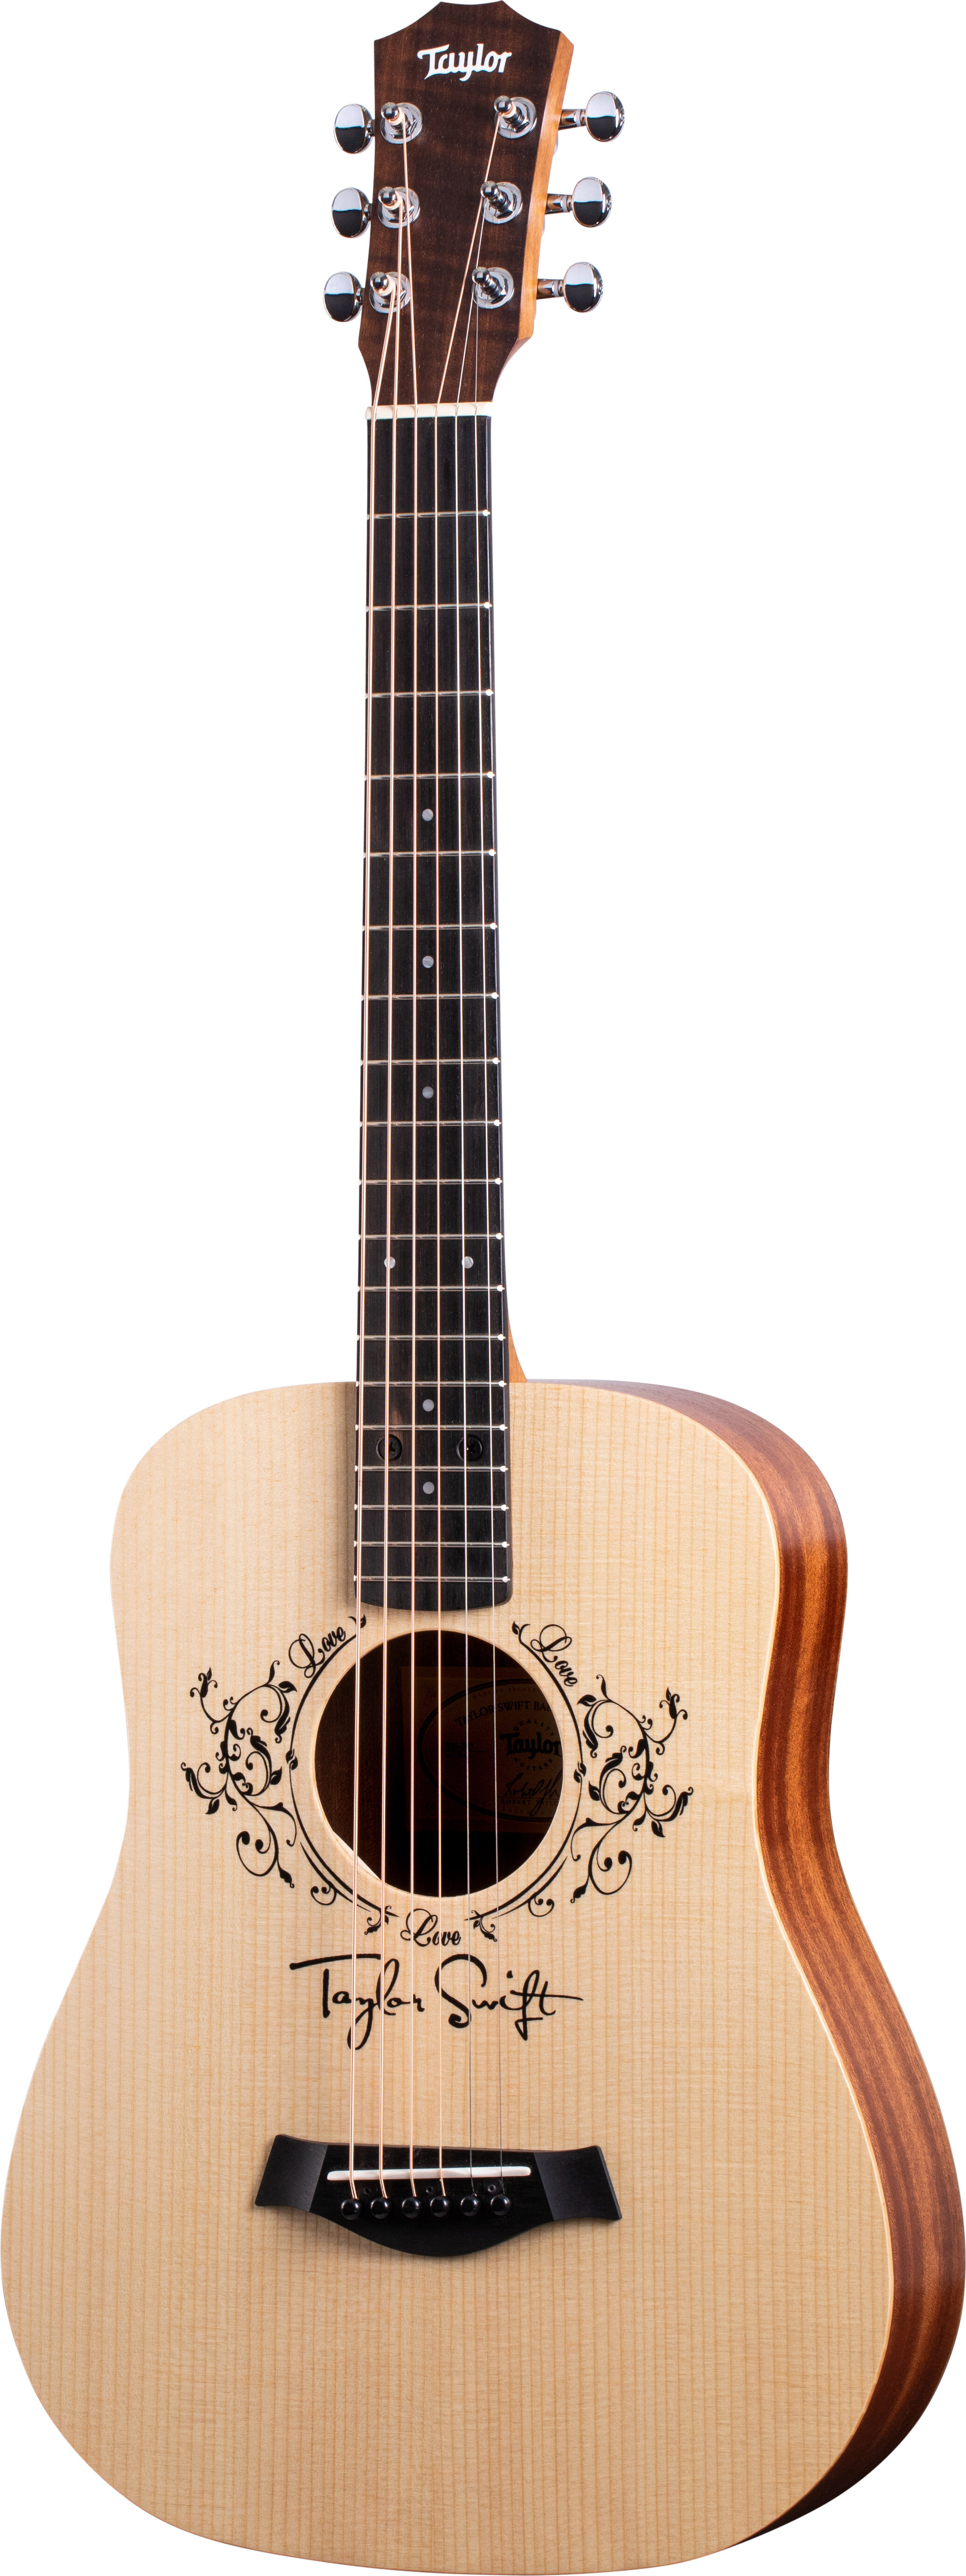 Taylor TSBTe Taylor Swift Acoustic Electric Guitar -  Taylor Guitars, TSBTe-22